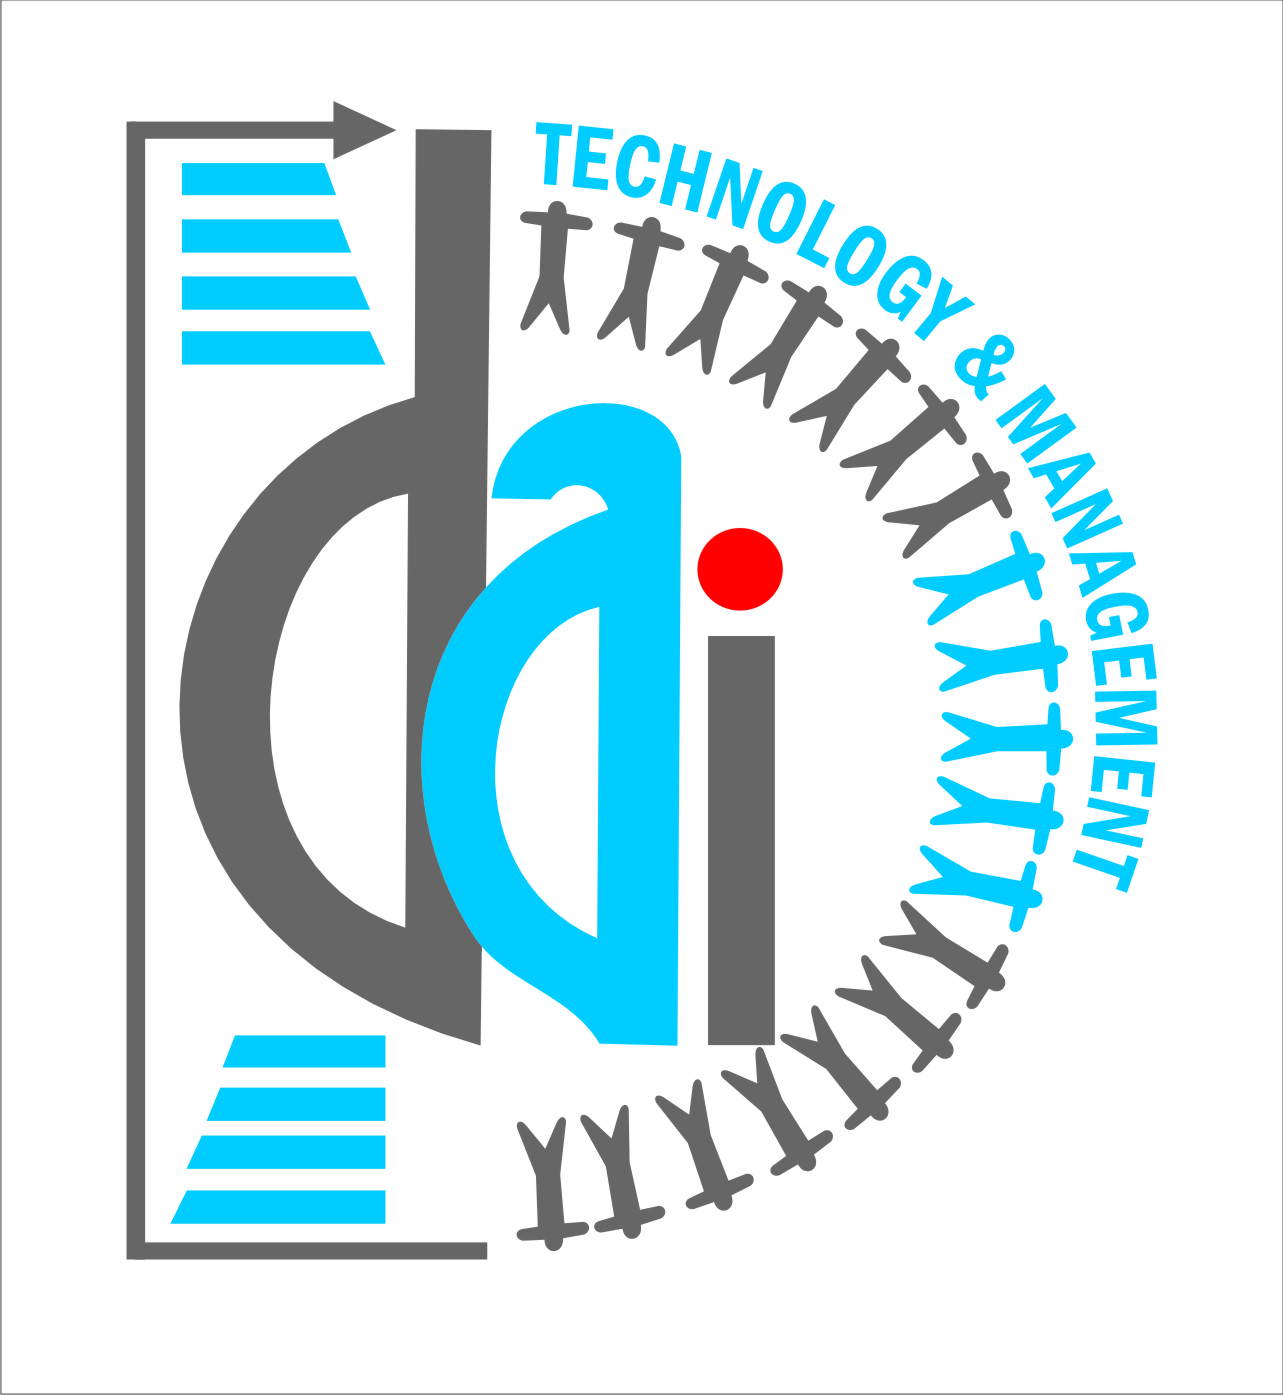 Dinabandhu Andrews Institute of Technology and Management, Kolkata